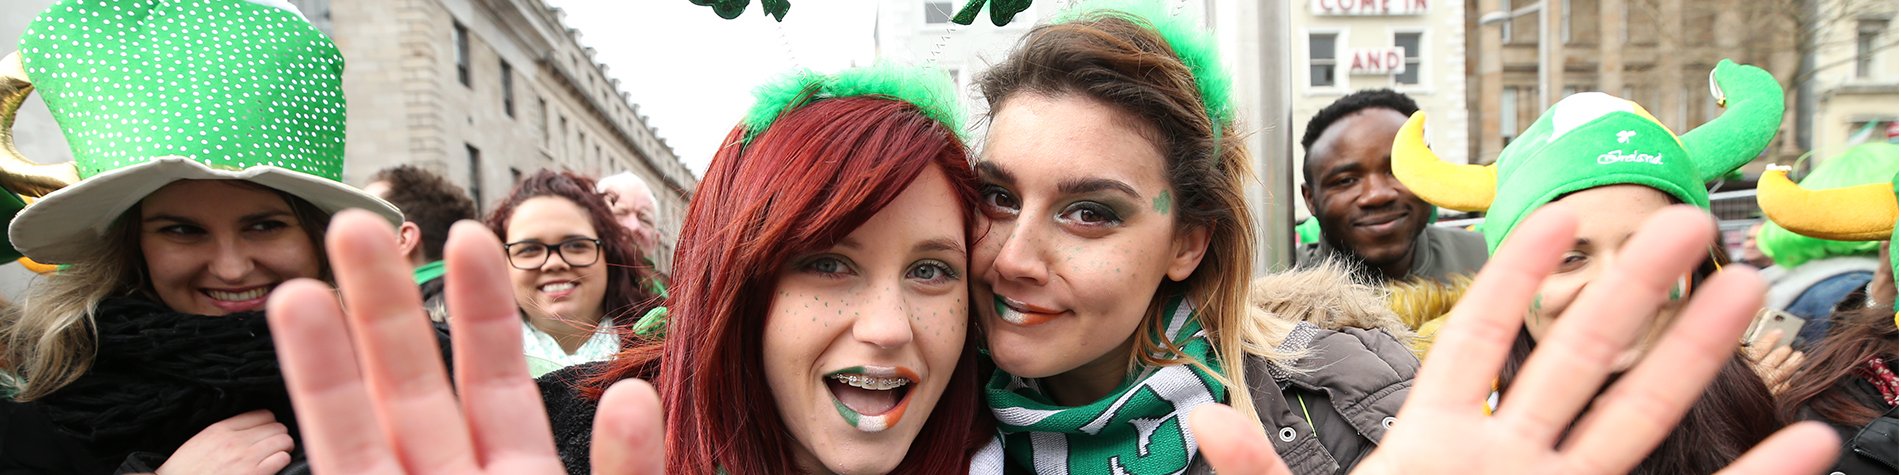 People Dressed up For St Patricks Day Festival Dublin